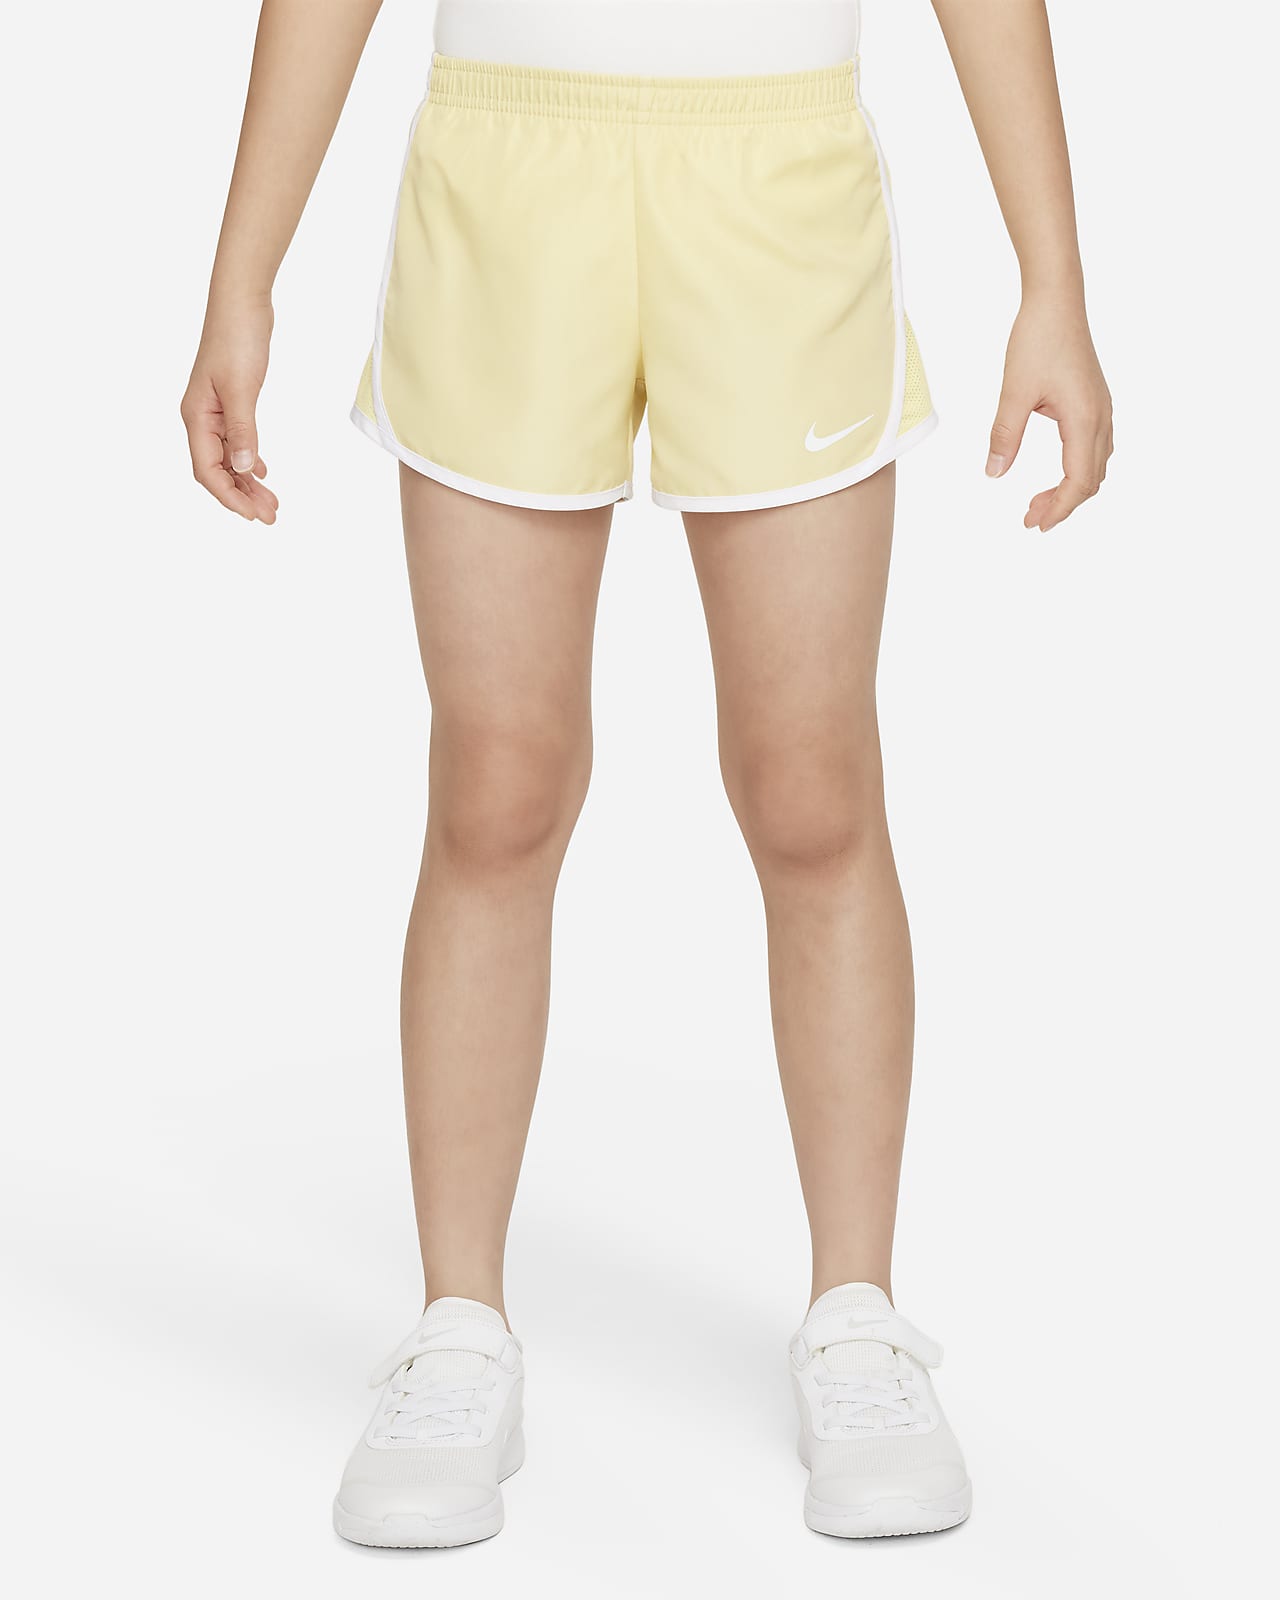 Nike Tempo Youth Girls Shorts